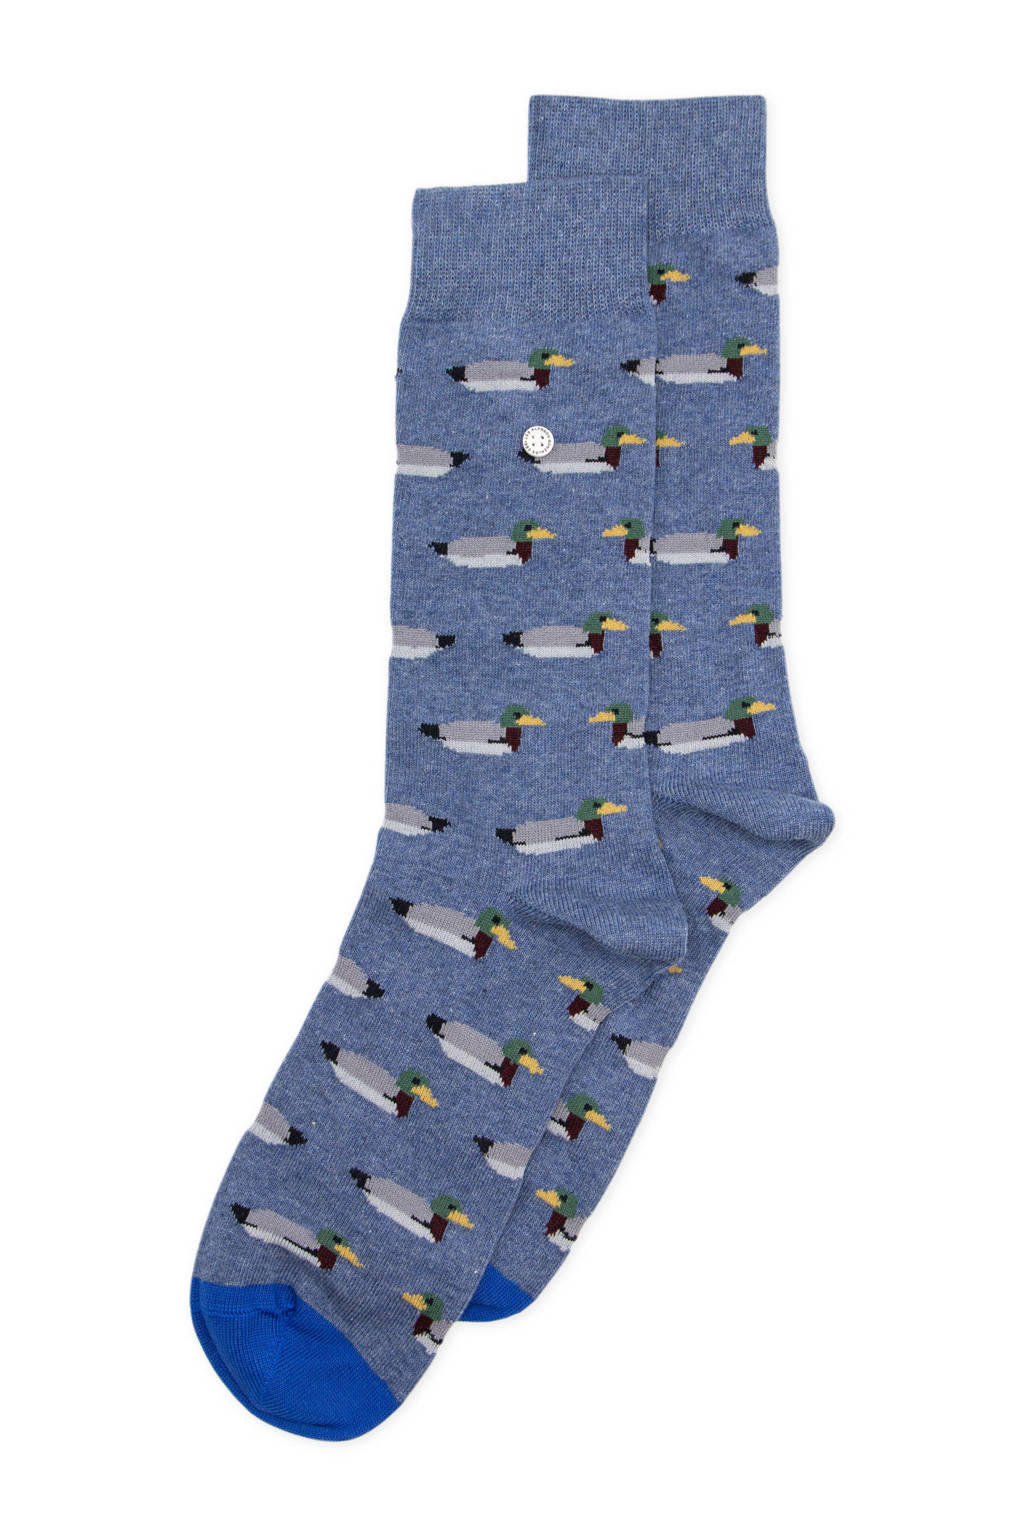 Alfredo Gonzales sokken Ducks marine, Marine/blauw melee